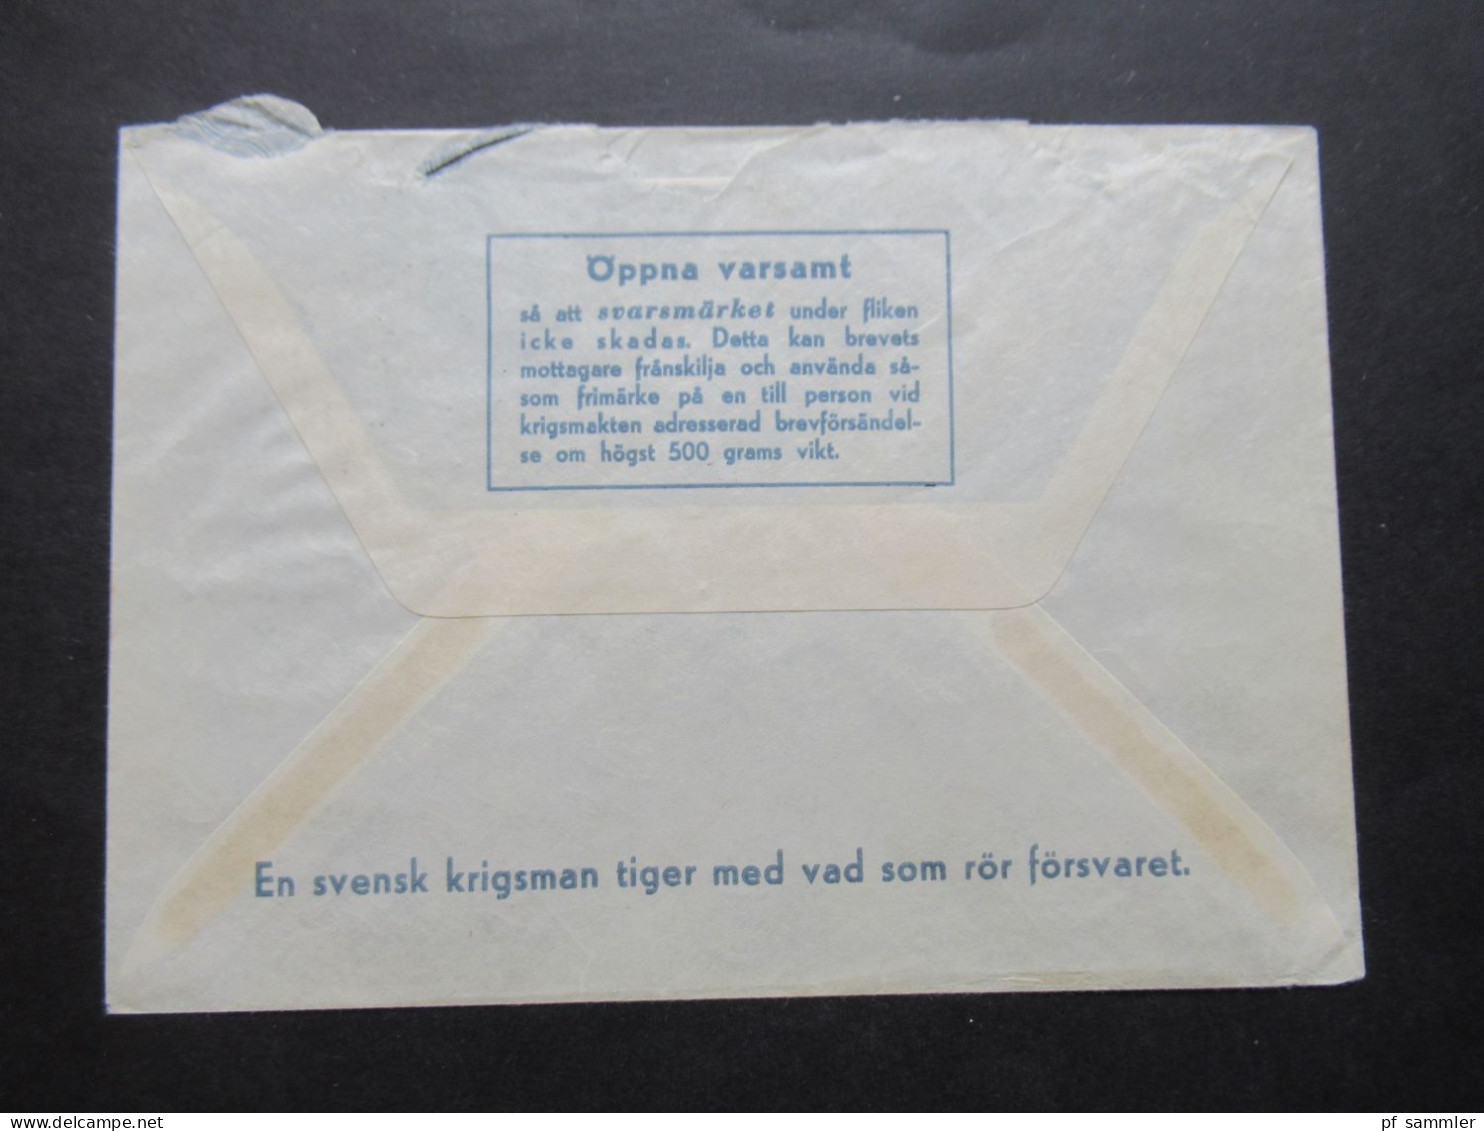 1966 Schweden Militärpost Militärbrev Stempel Svenska FN Bat Cypern / Schwedisches Militär Auf Zypern / FN Bat STR Komp - Militari